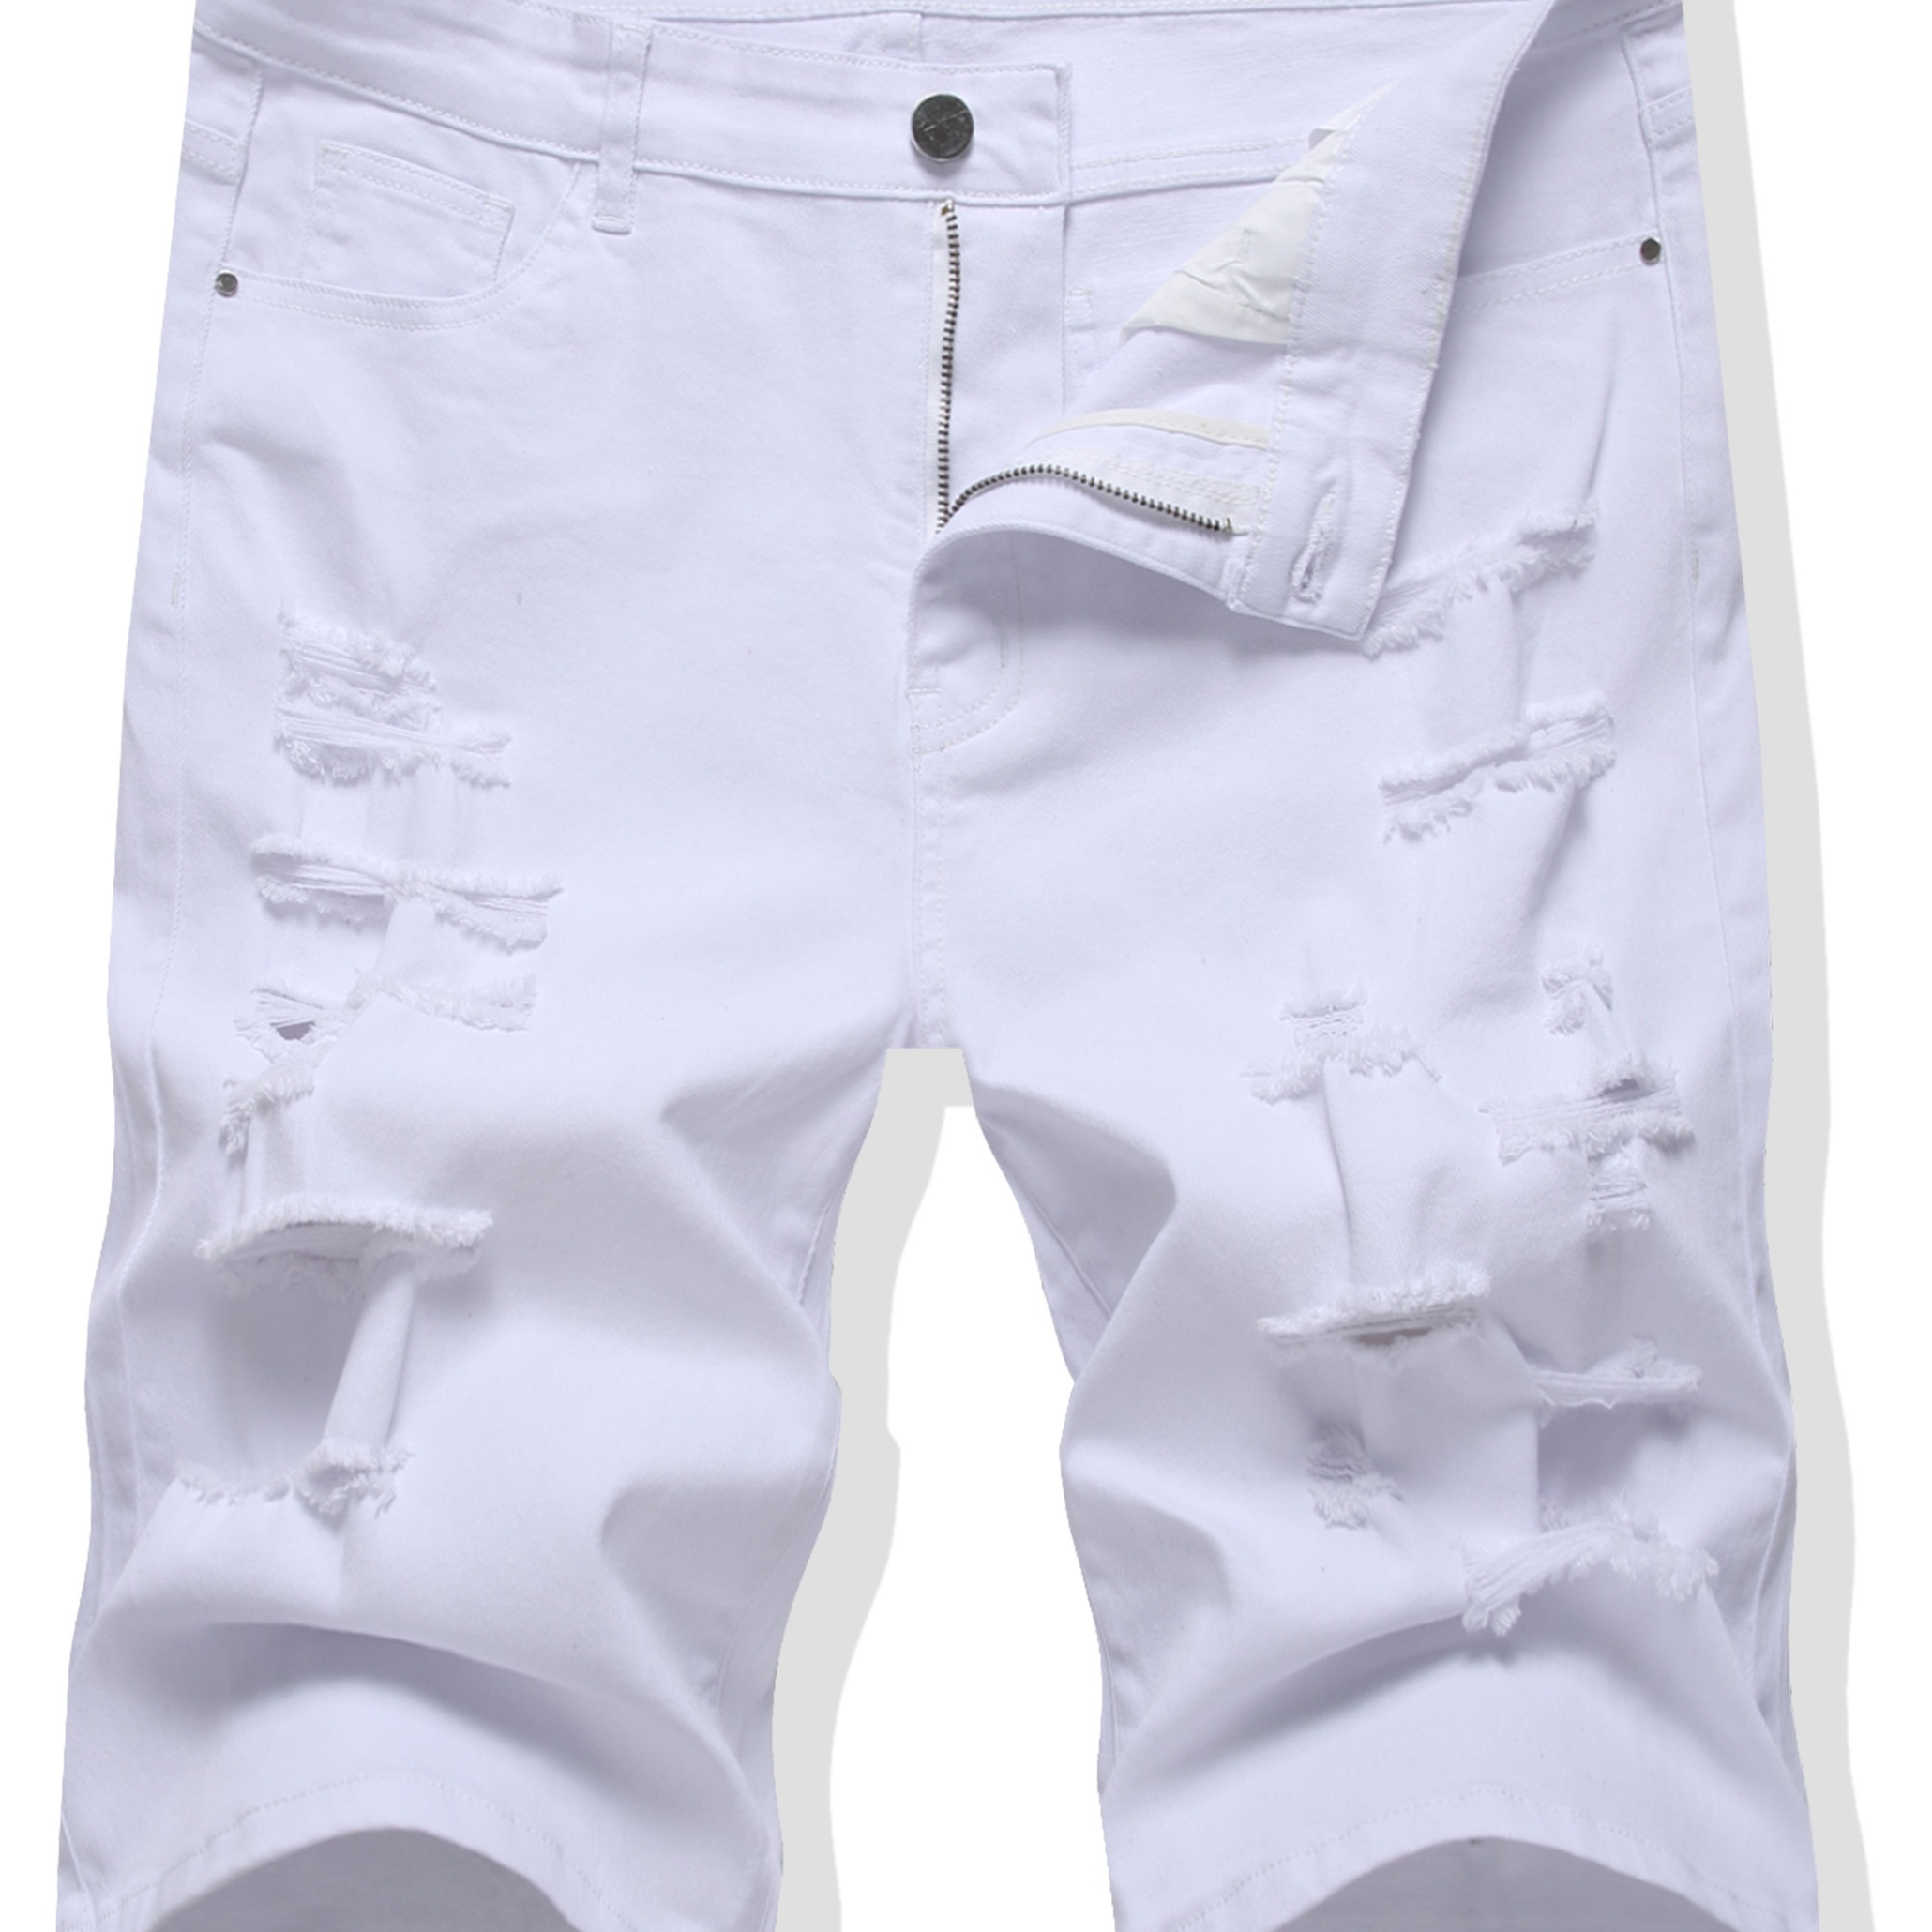 Men's Denim Shorts Casual White Ripped Straight Shorts - Clothing ...